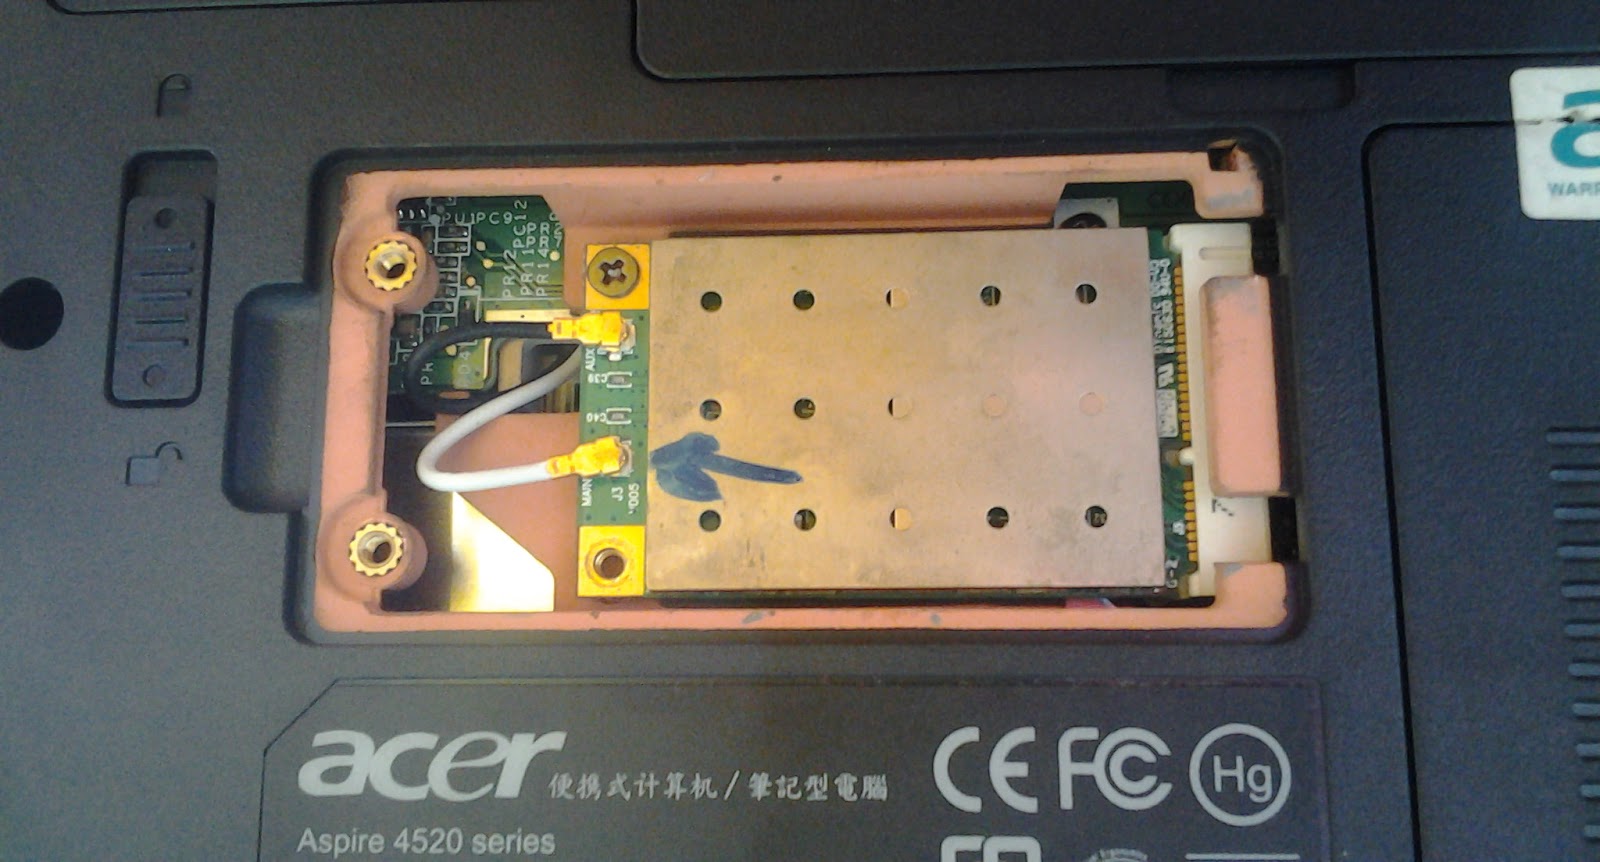 Драйверы для Acer Aspire 4520 - runodevicecom